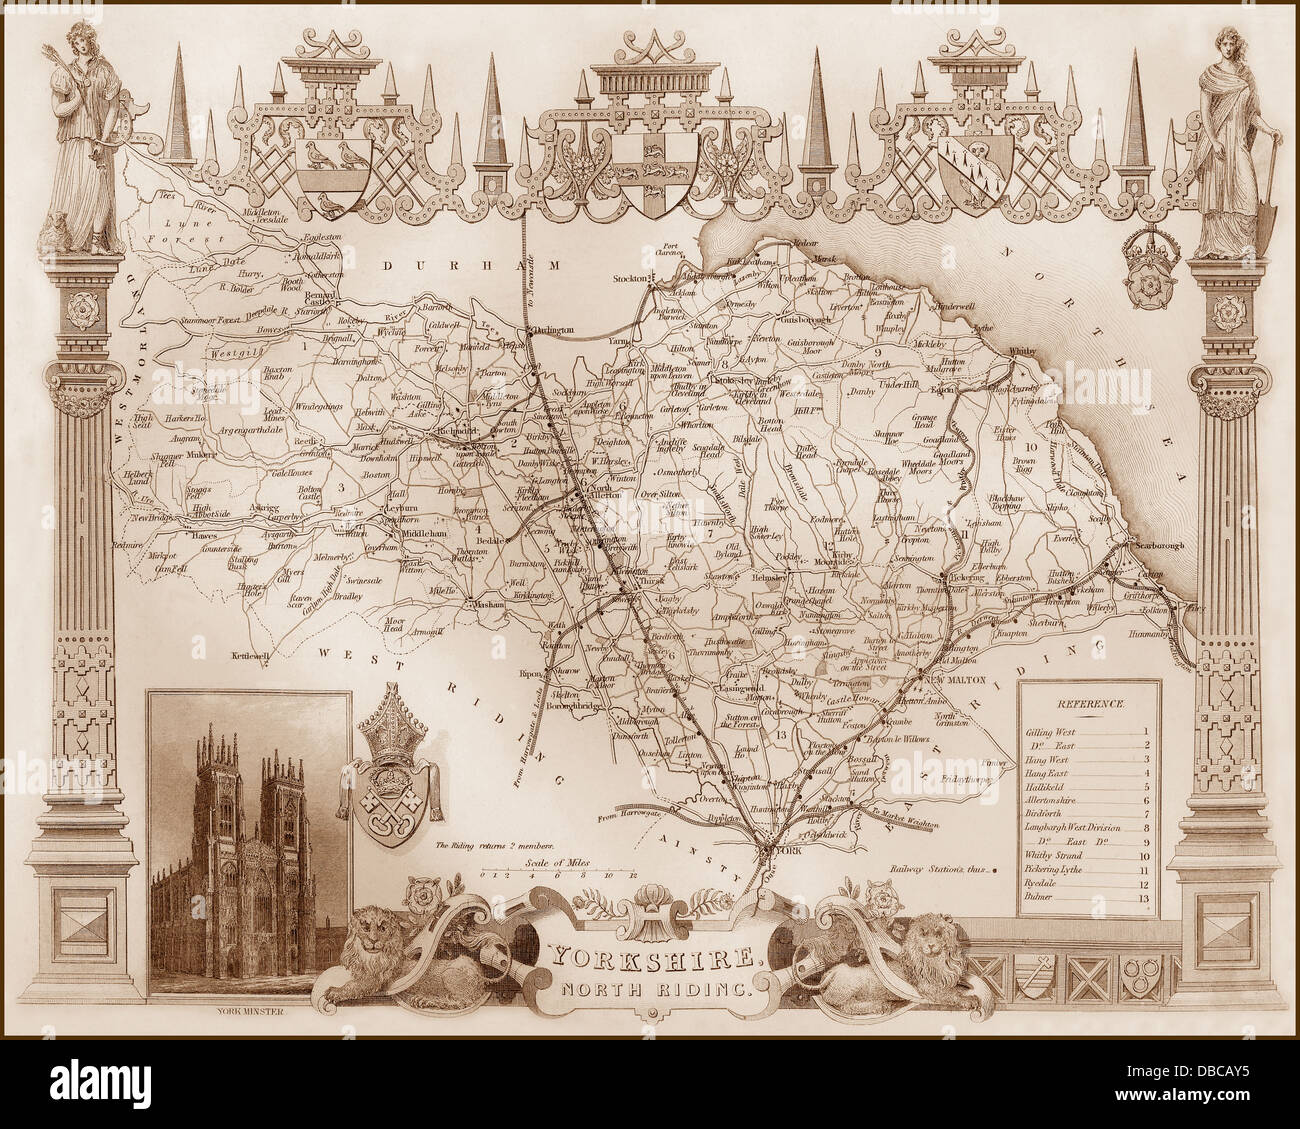 1840 Victorian Plan de North Riding of Yorkshire Banque D'Images